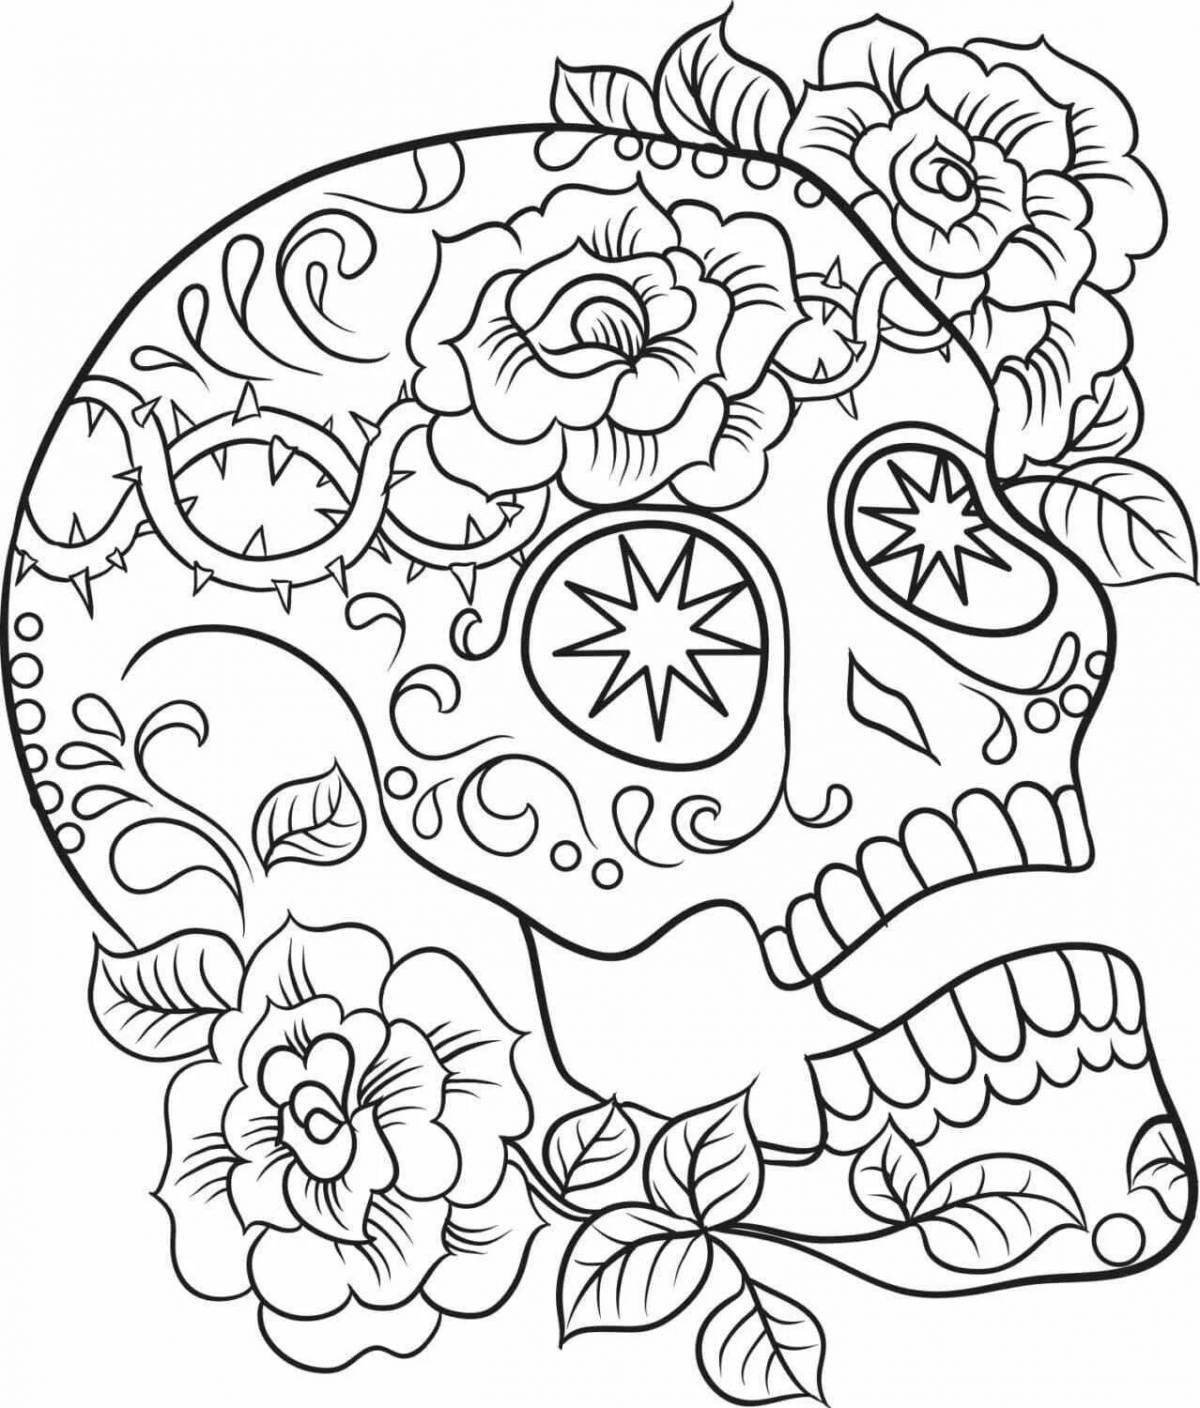 Fascinating anti-stress skull coloring